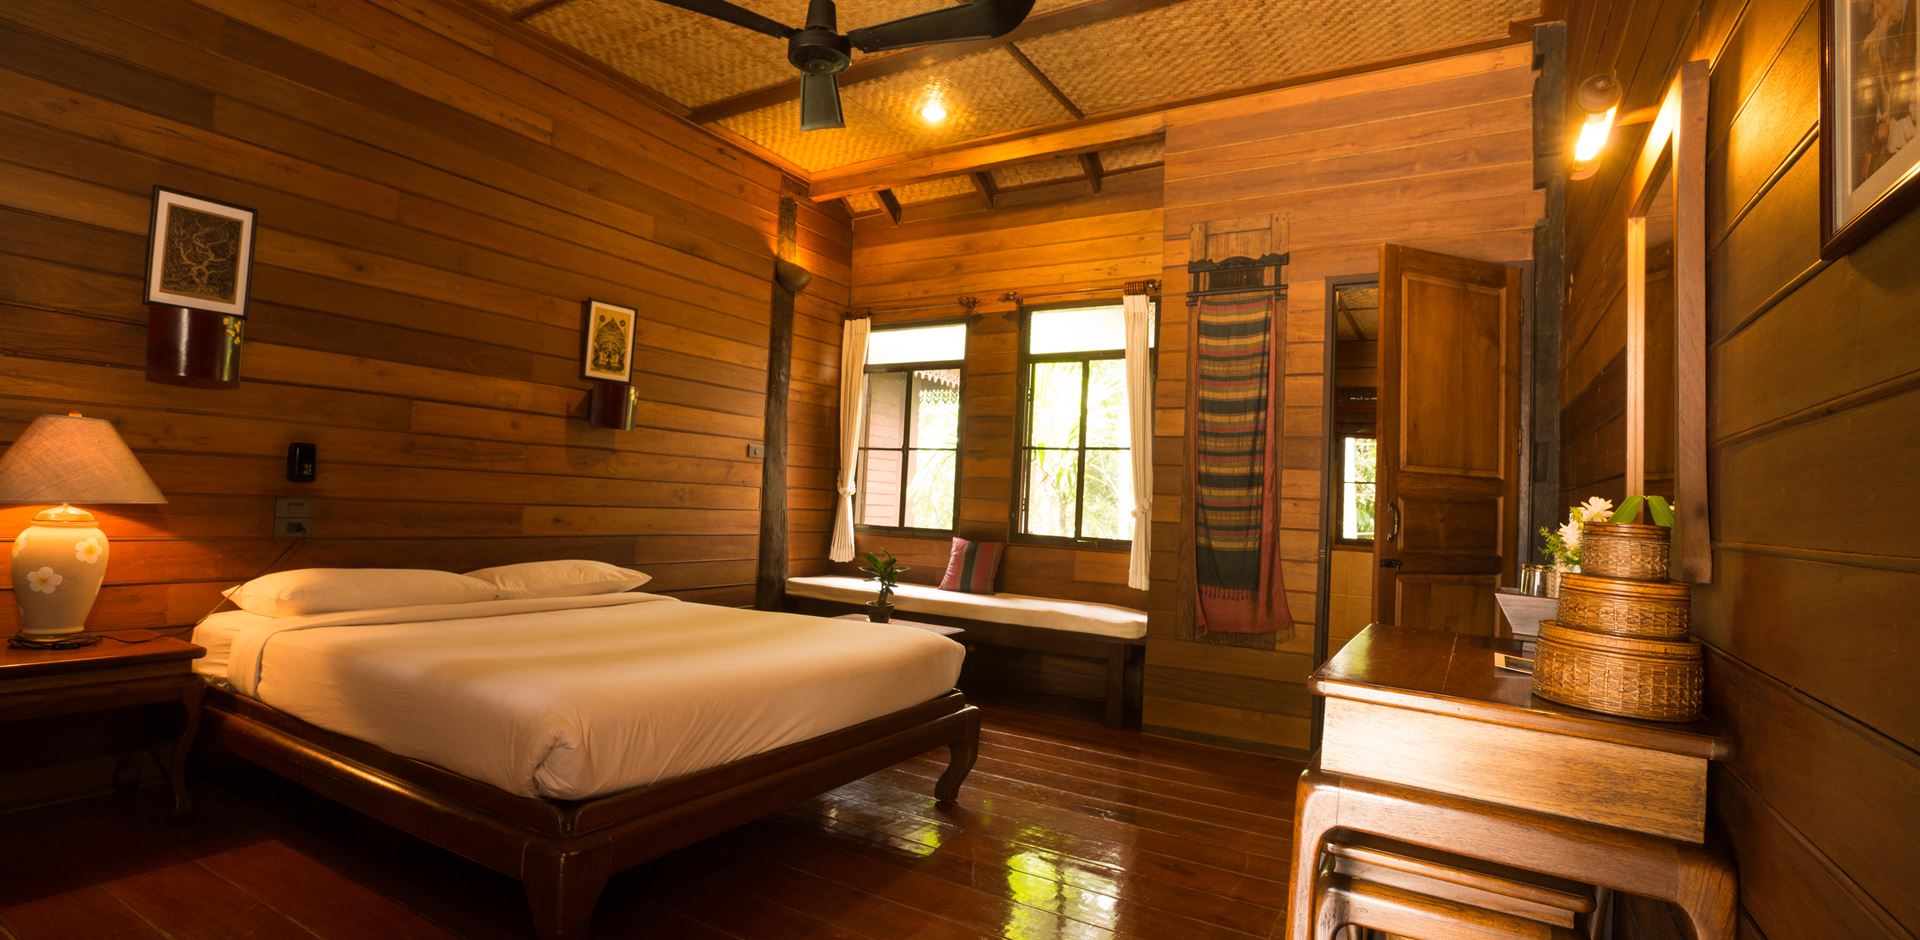 Thailand, Chiang Mai, Khum Lanna, Rooms Inside